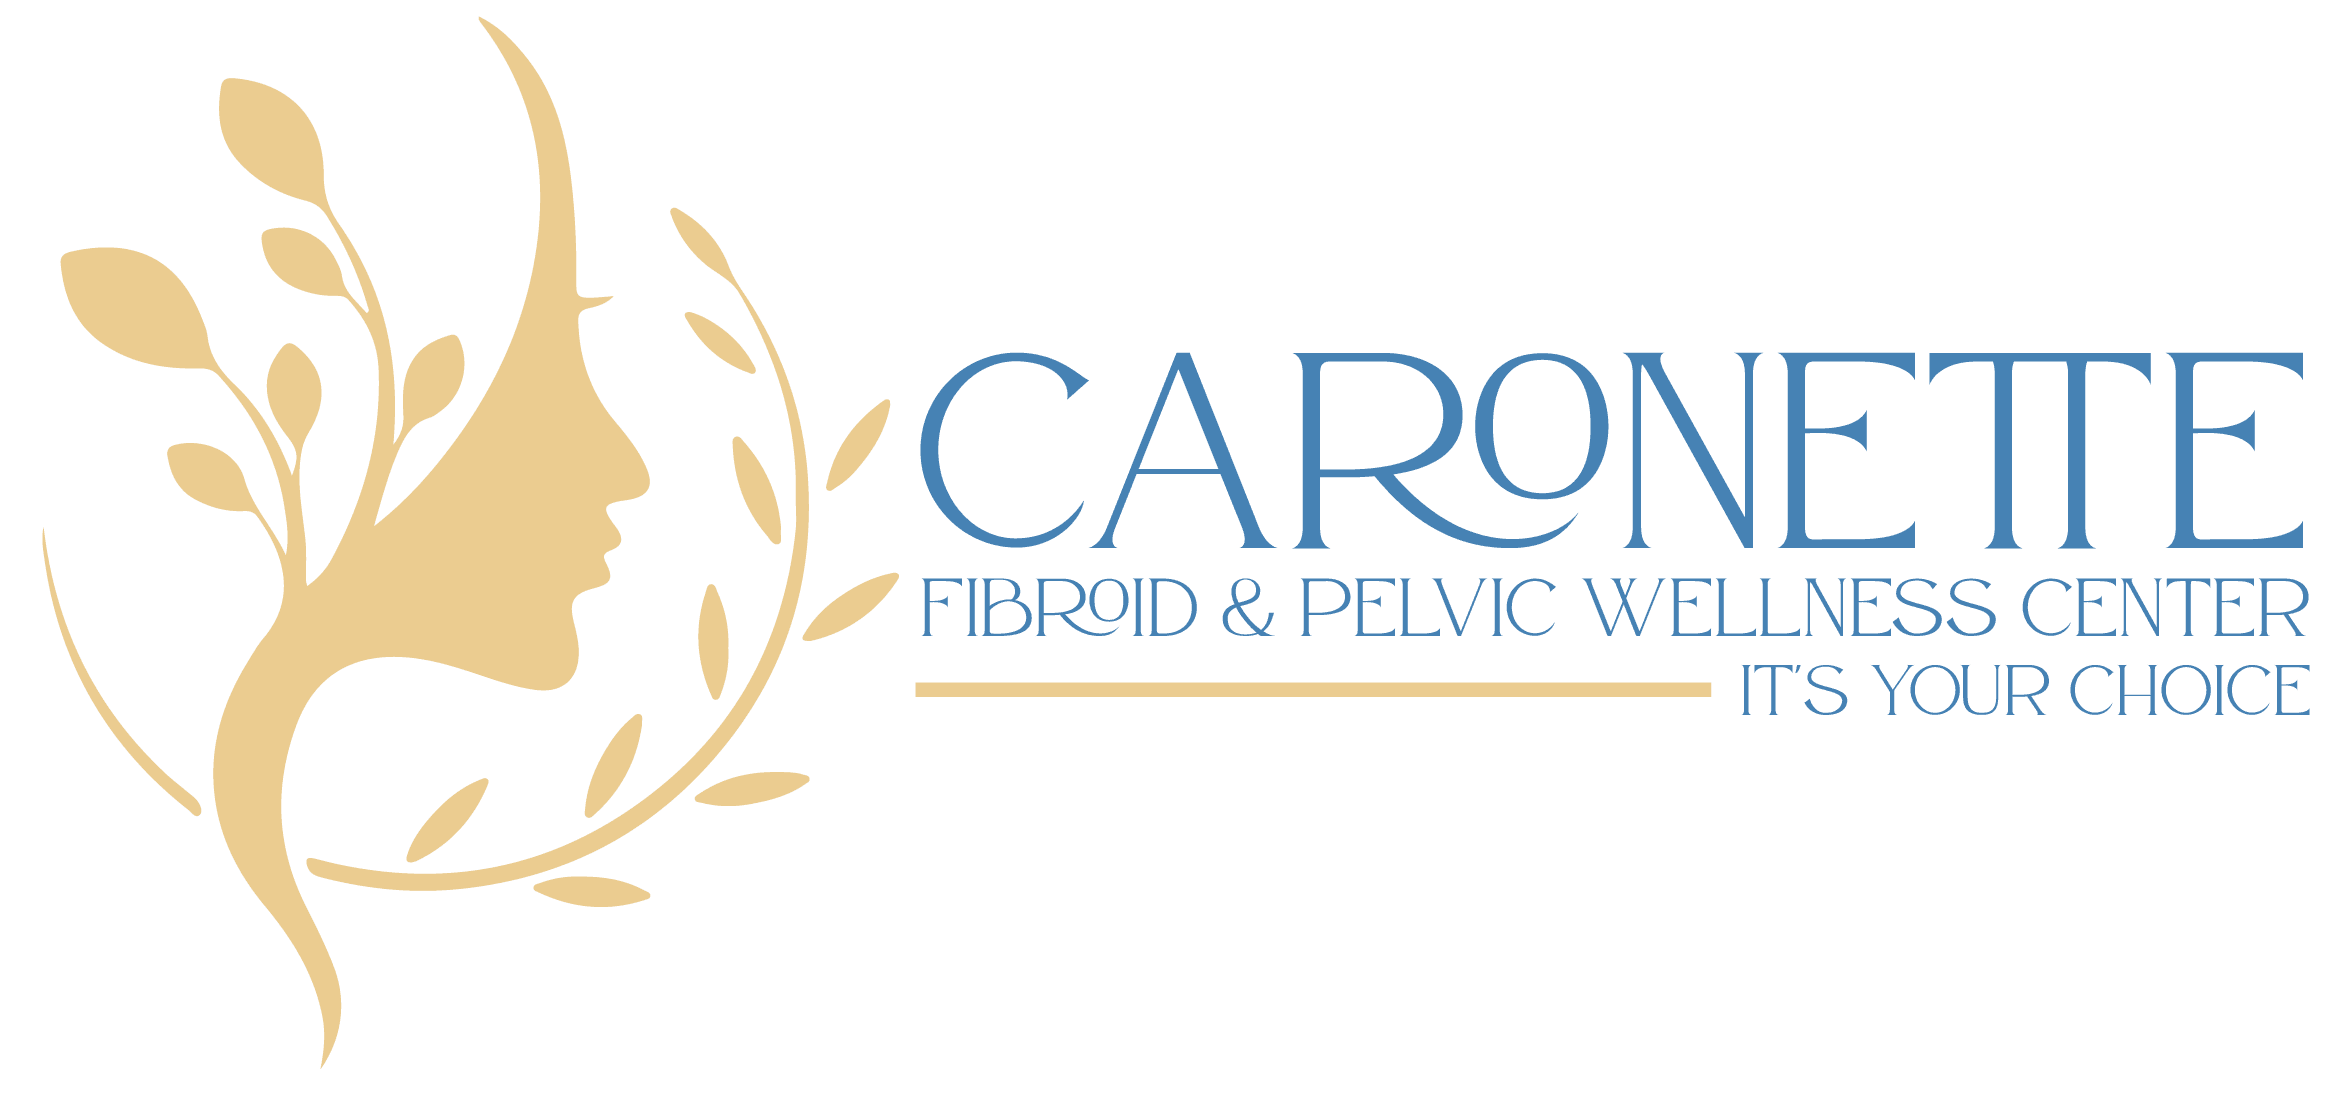 Caronette Fibroid & Pelvic Wellness Center